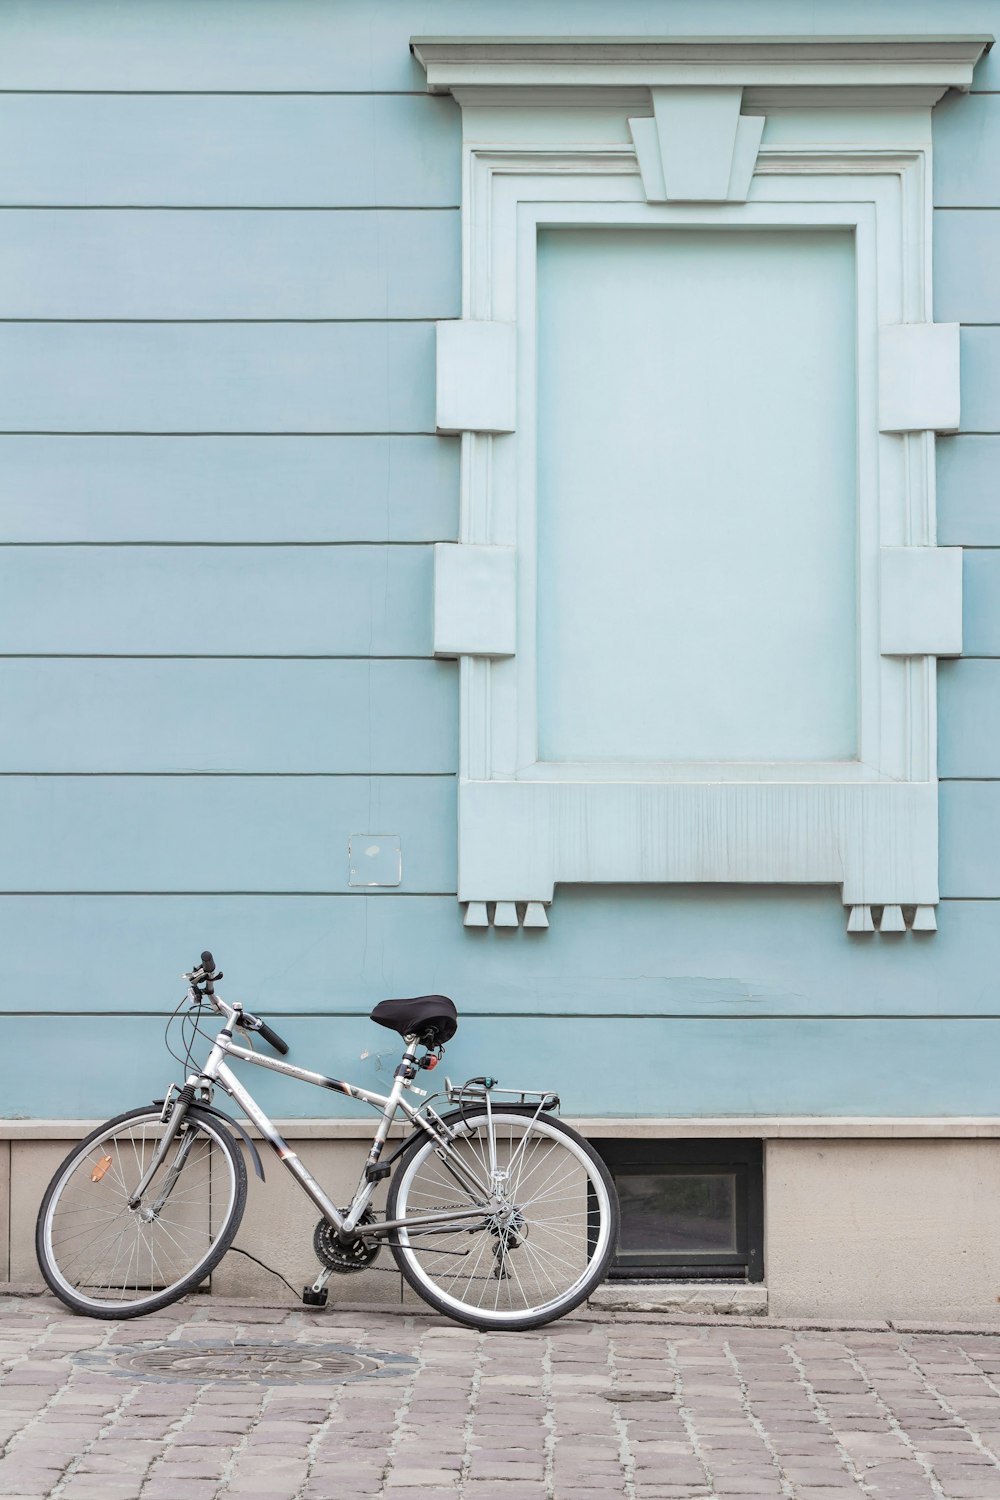 gray city bike parking on pavement on wall